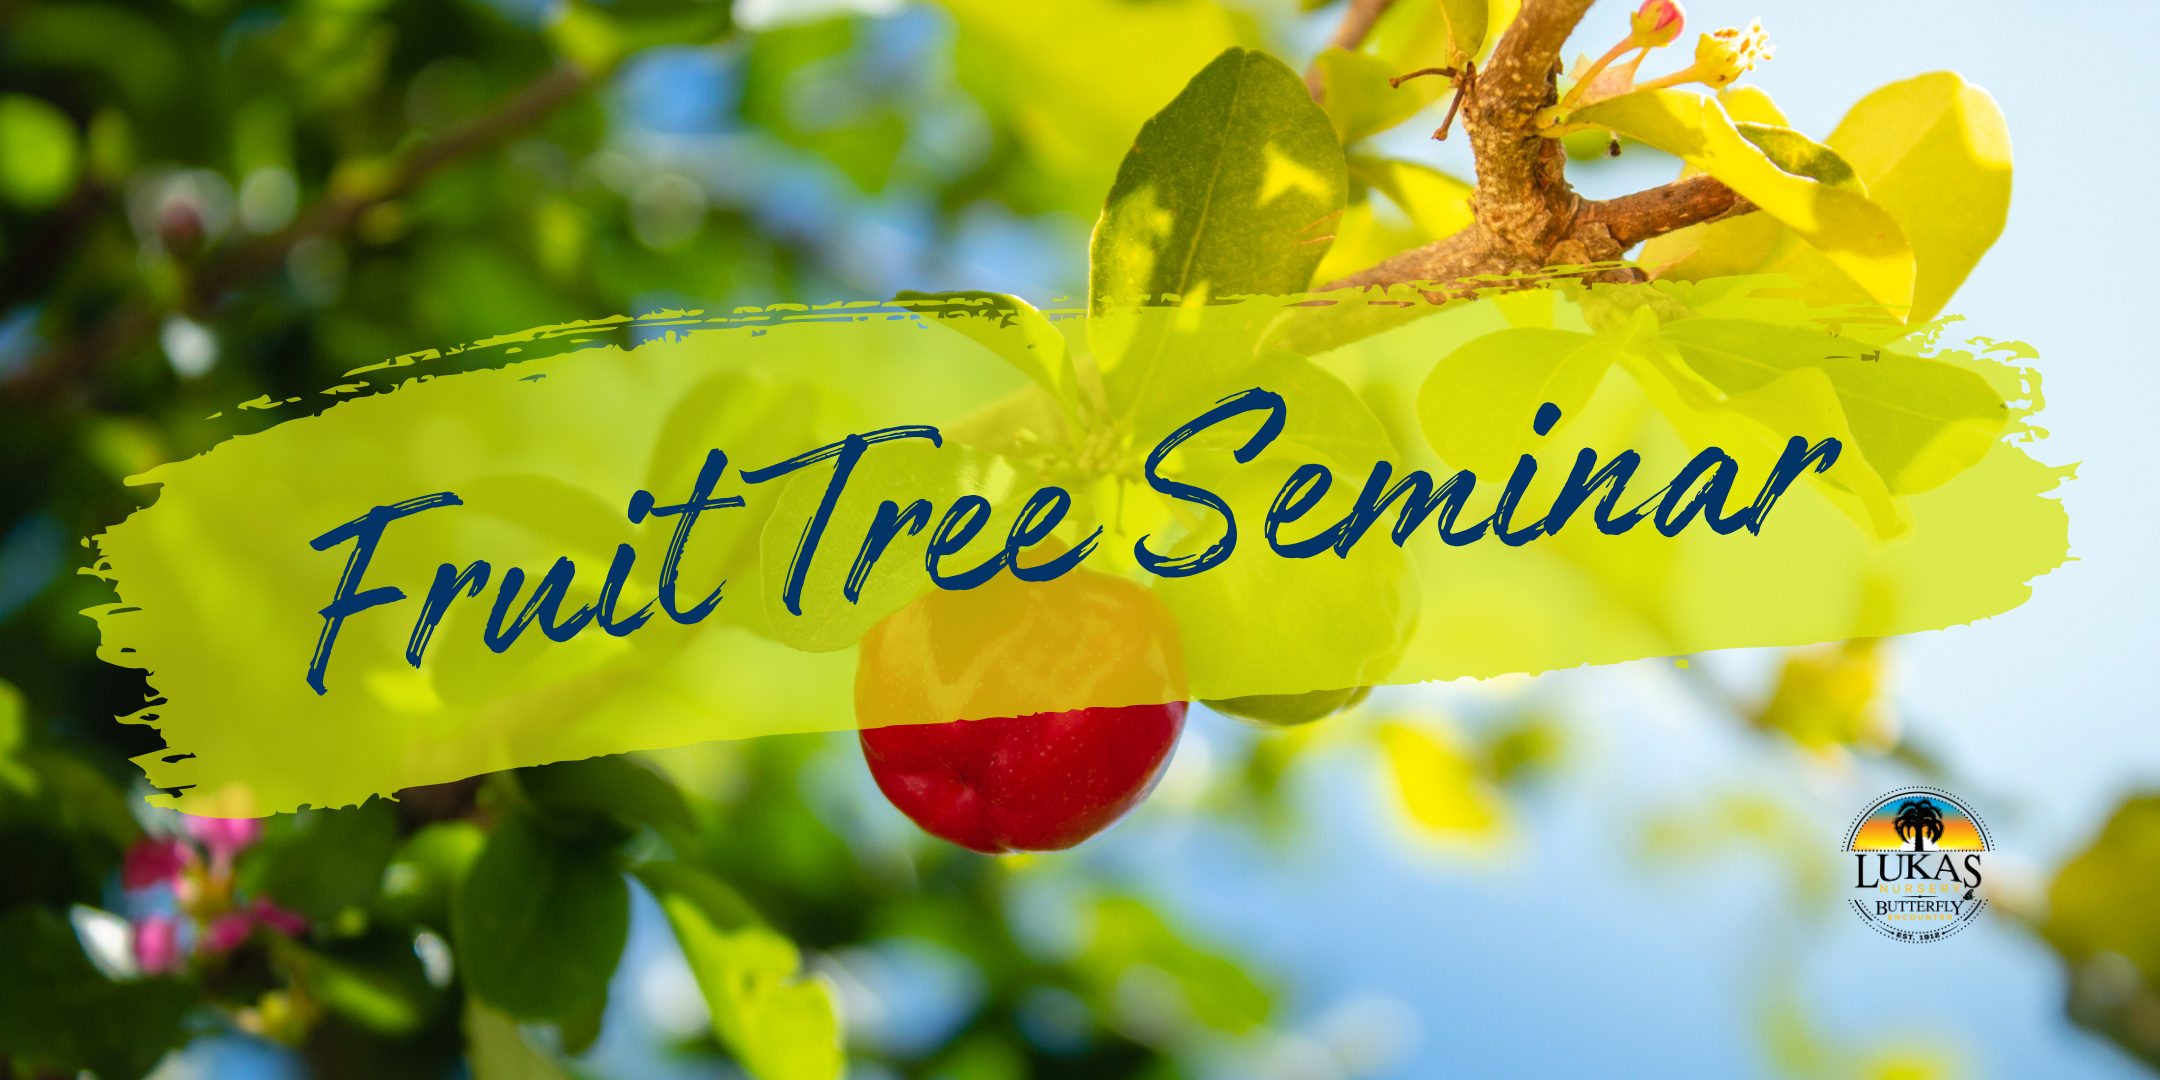 fruit tree seminar